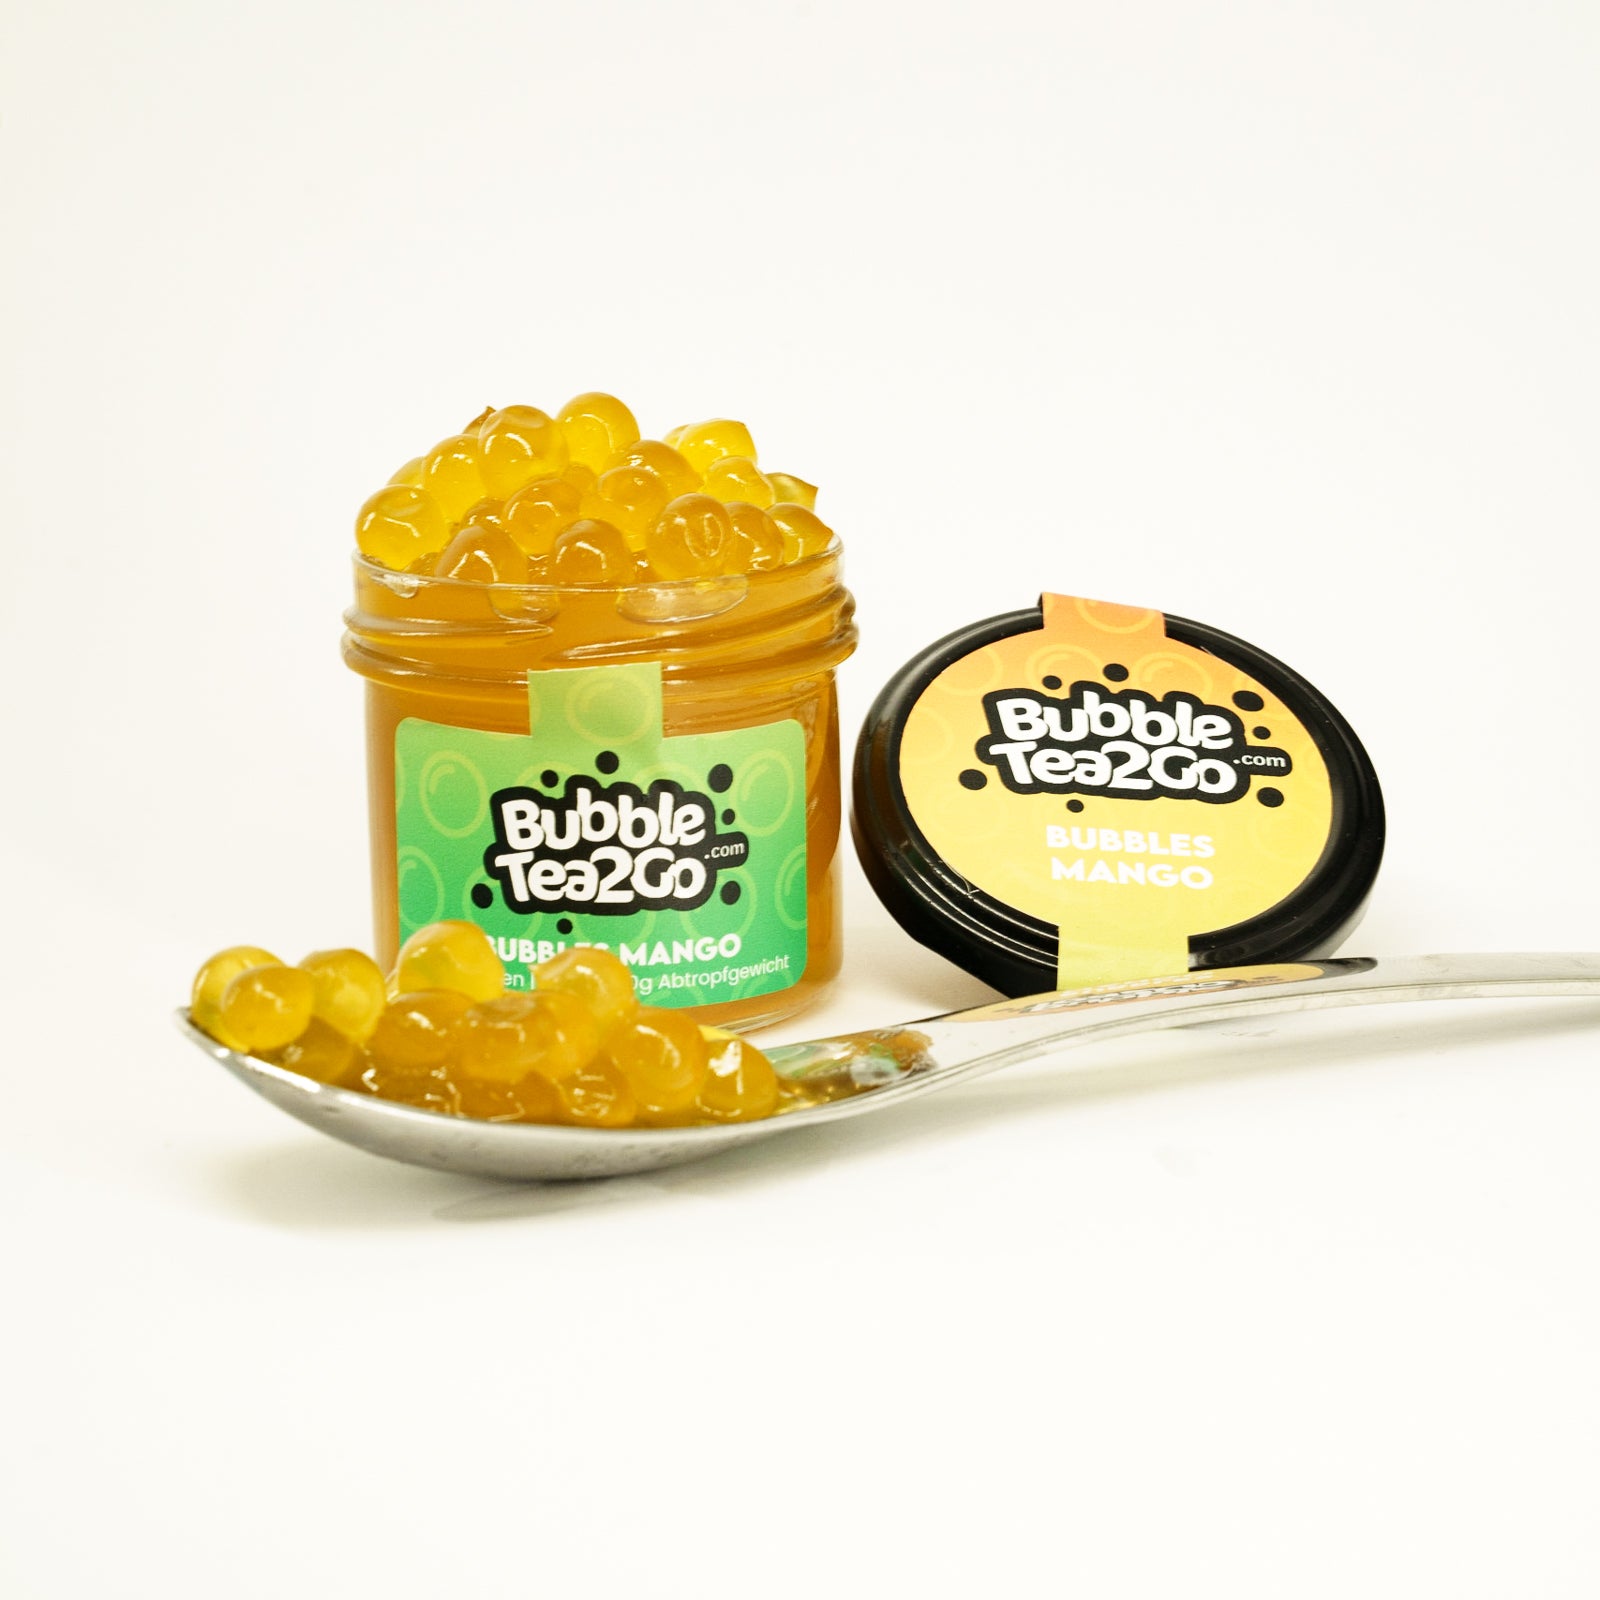 Bubbles - Mango 2 porties (120g)